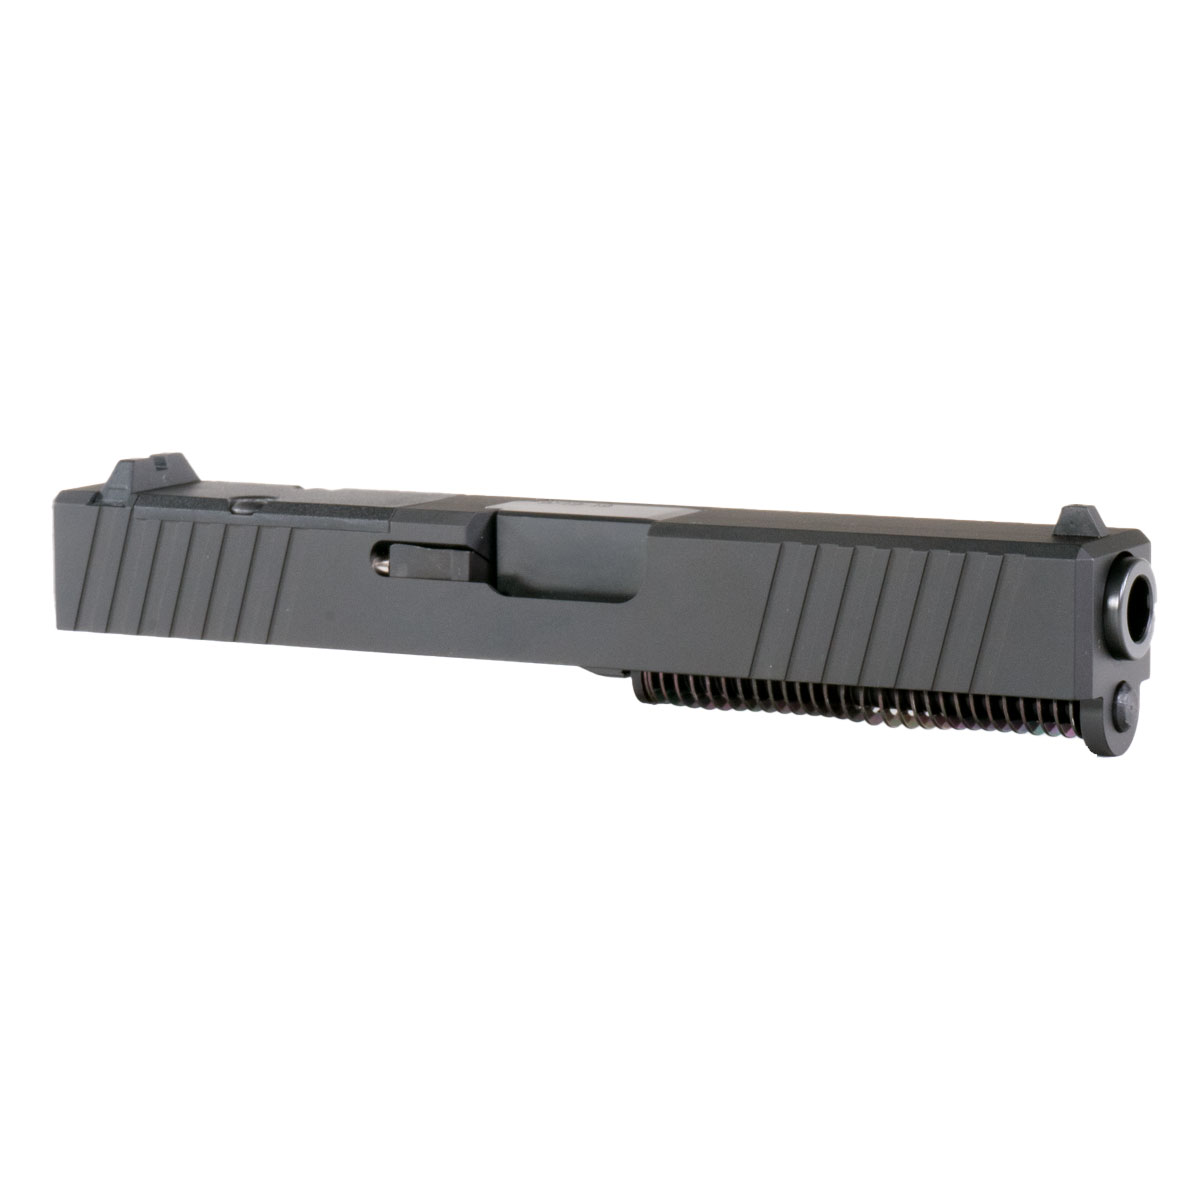 MMC 'NovaNova' 9mm Complete Slide Kit - Glock 19  Compatible